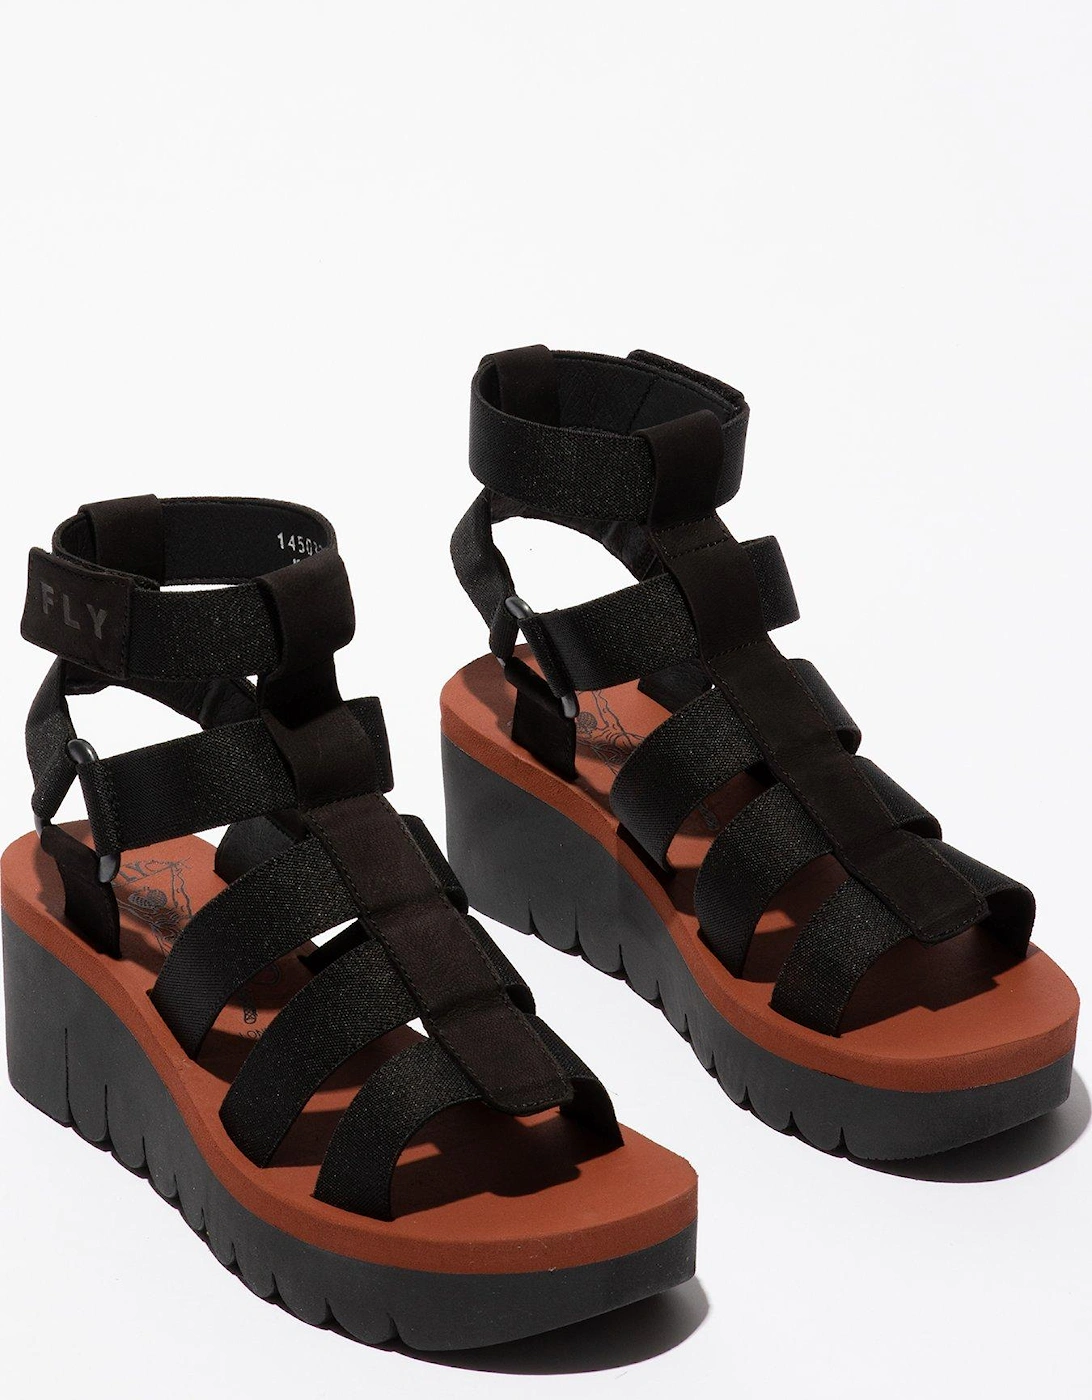 Yufi Gladiator Wedged Sandals - Black